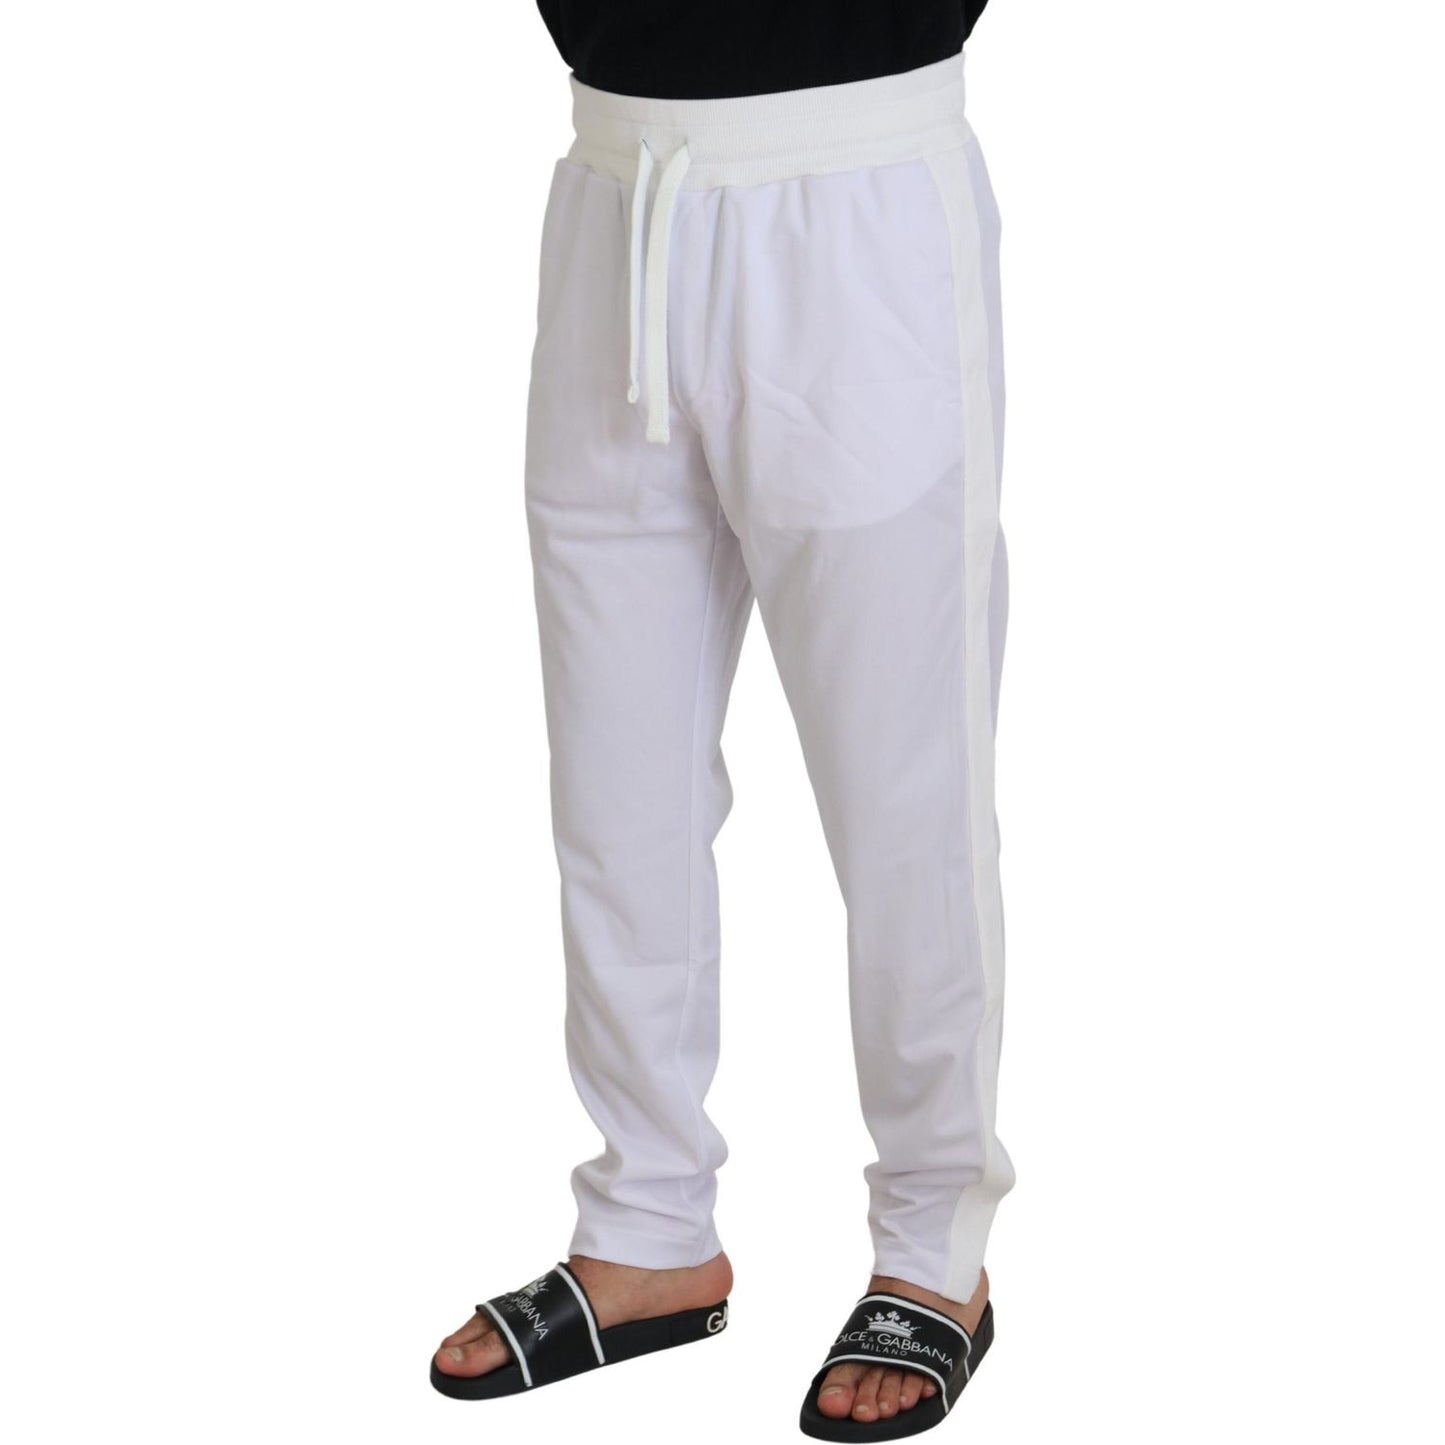 Elegant White Jogger Pants for Sophisticated Comfort